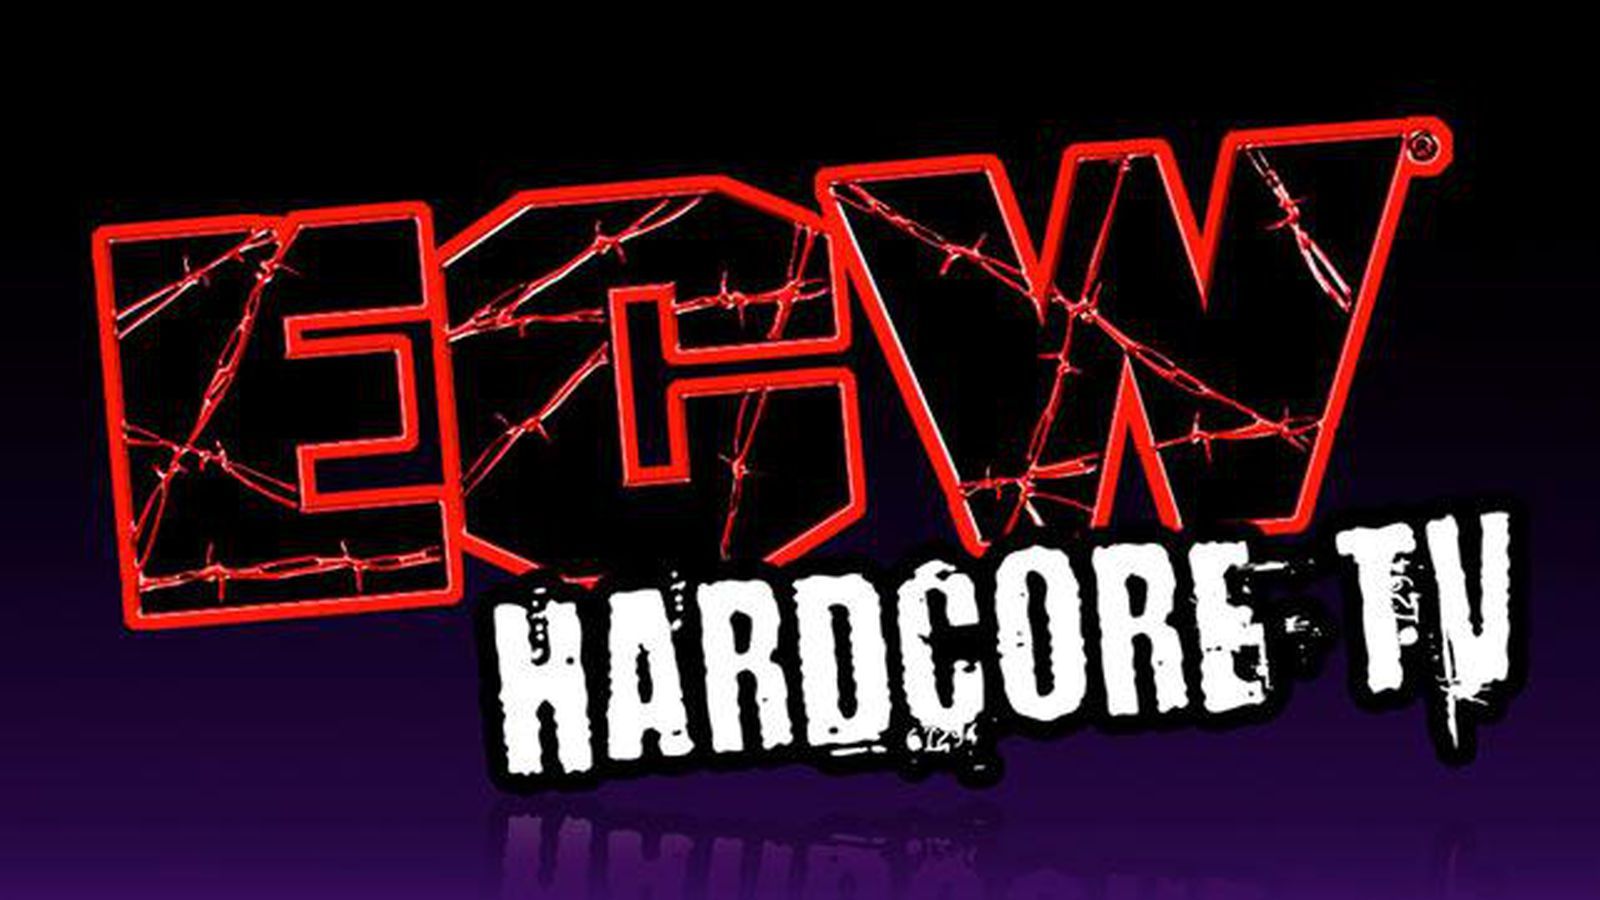 ECW Hardcore TV logo